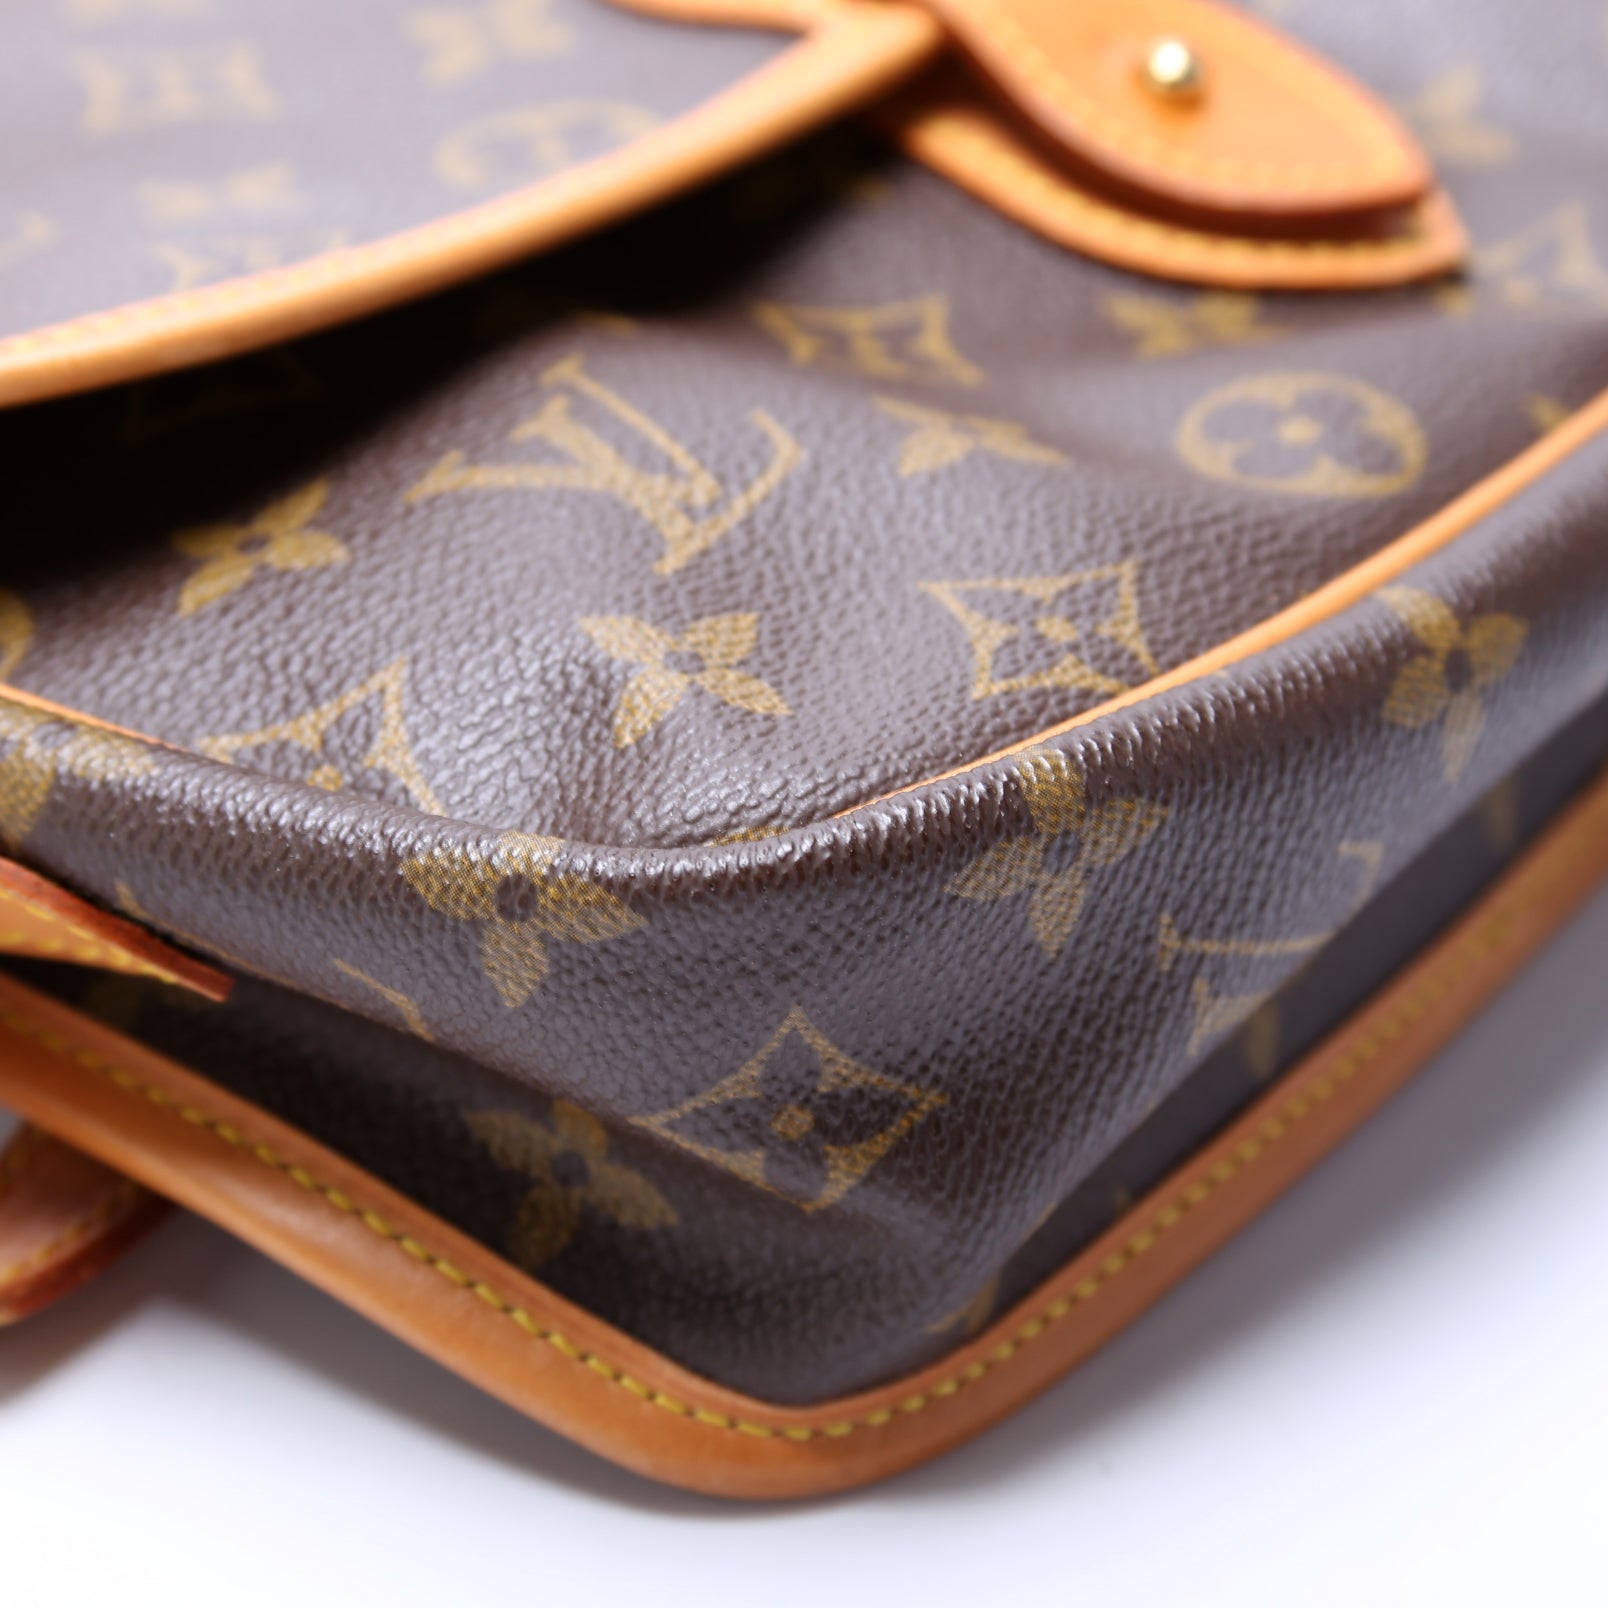 Louis Vuitton, Bags, Louis Vuitton Sac Gibeciere Pm Bag